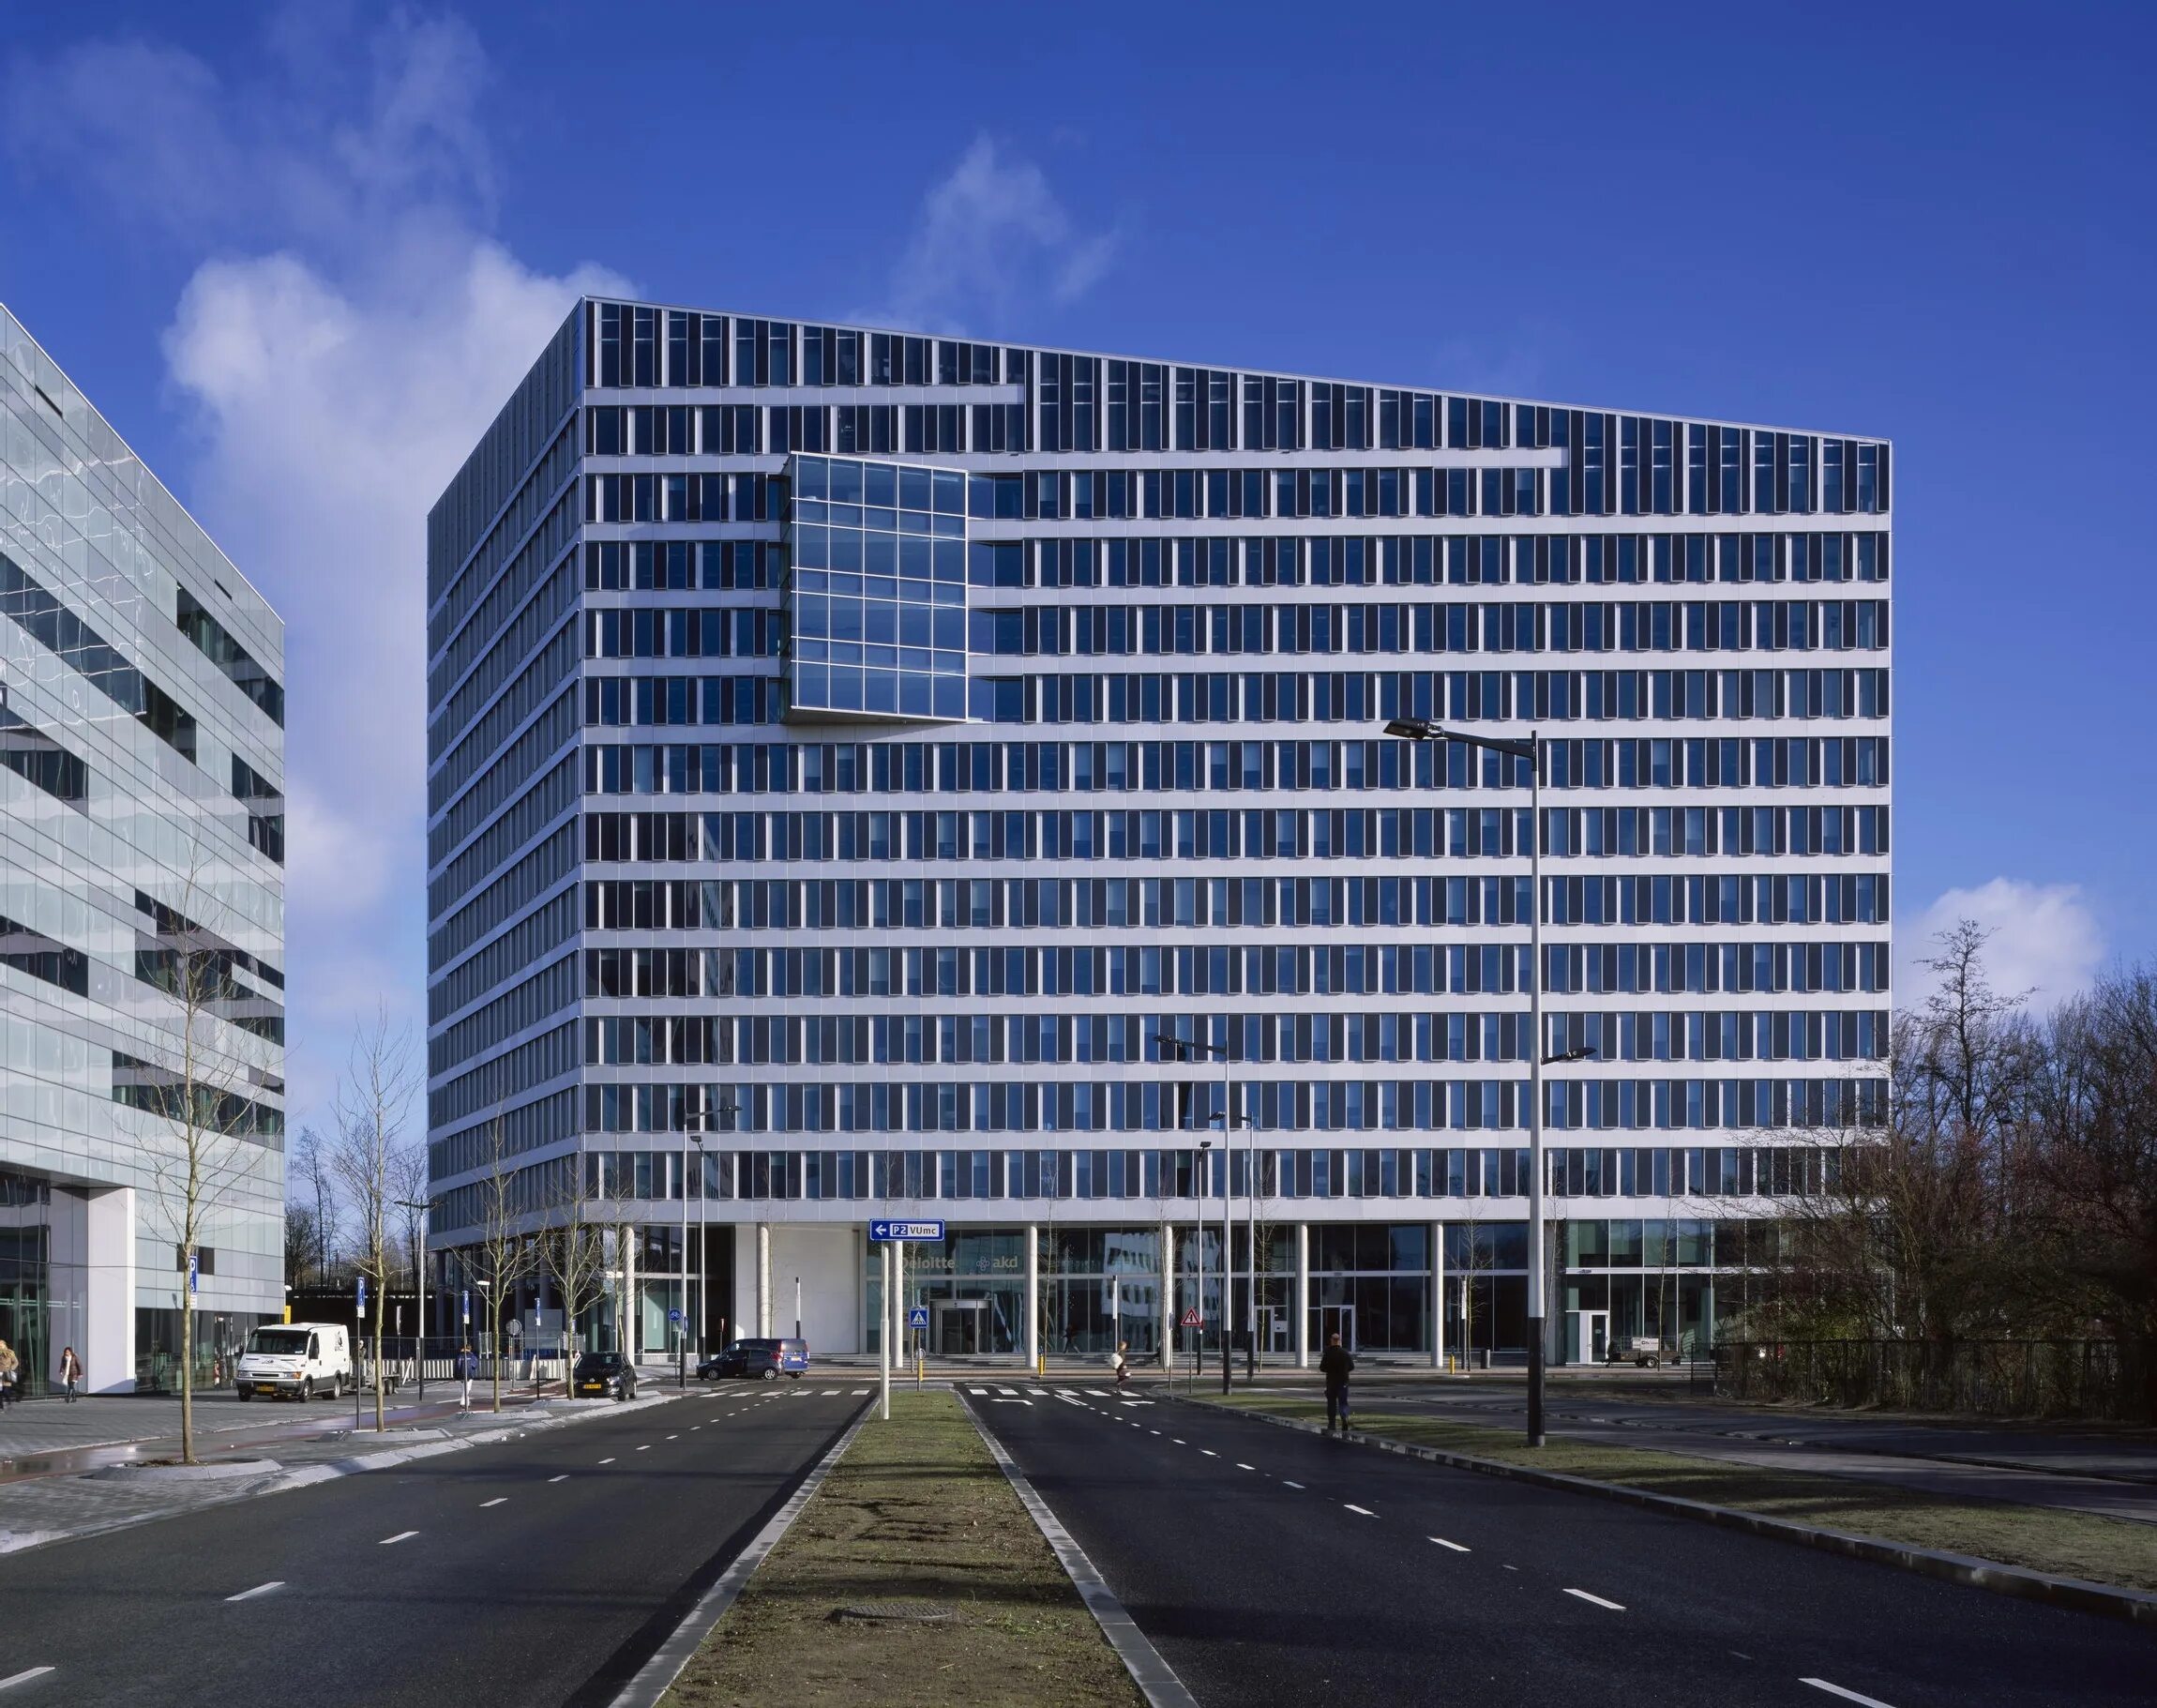 The office building is. Штаб-квартира Deloitte здание the Edge Нидерланды. The Edge, Нидерланды. Здание Edge в Амстердаме. Офисное здание.